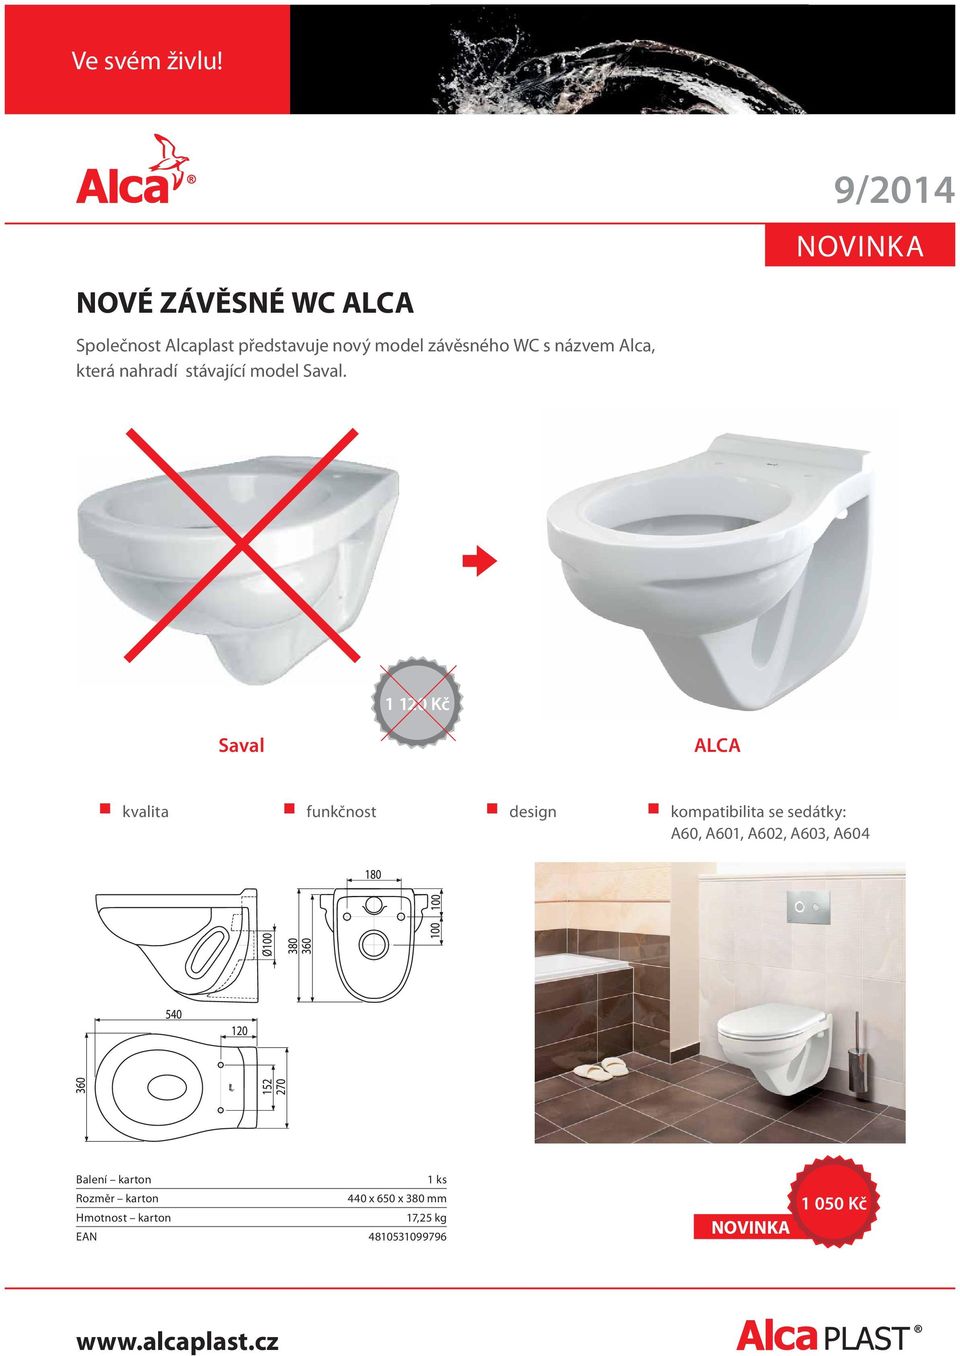 1 120 Kč Saval ALCA kvalita funkčnost design kompatibilita se sedátky: A60,